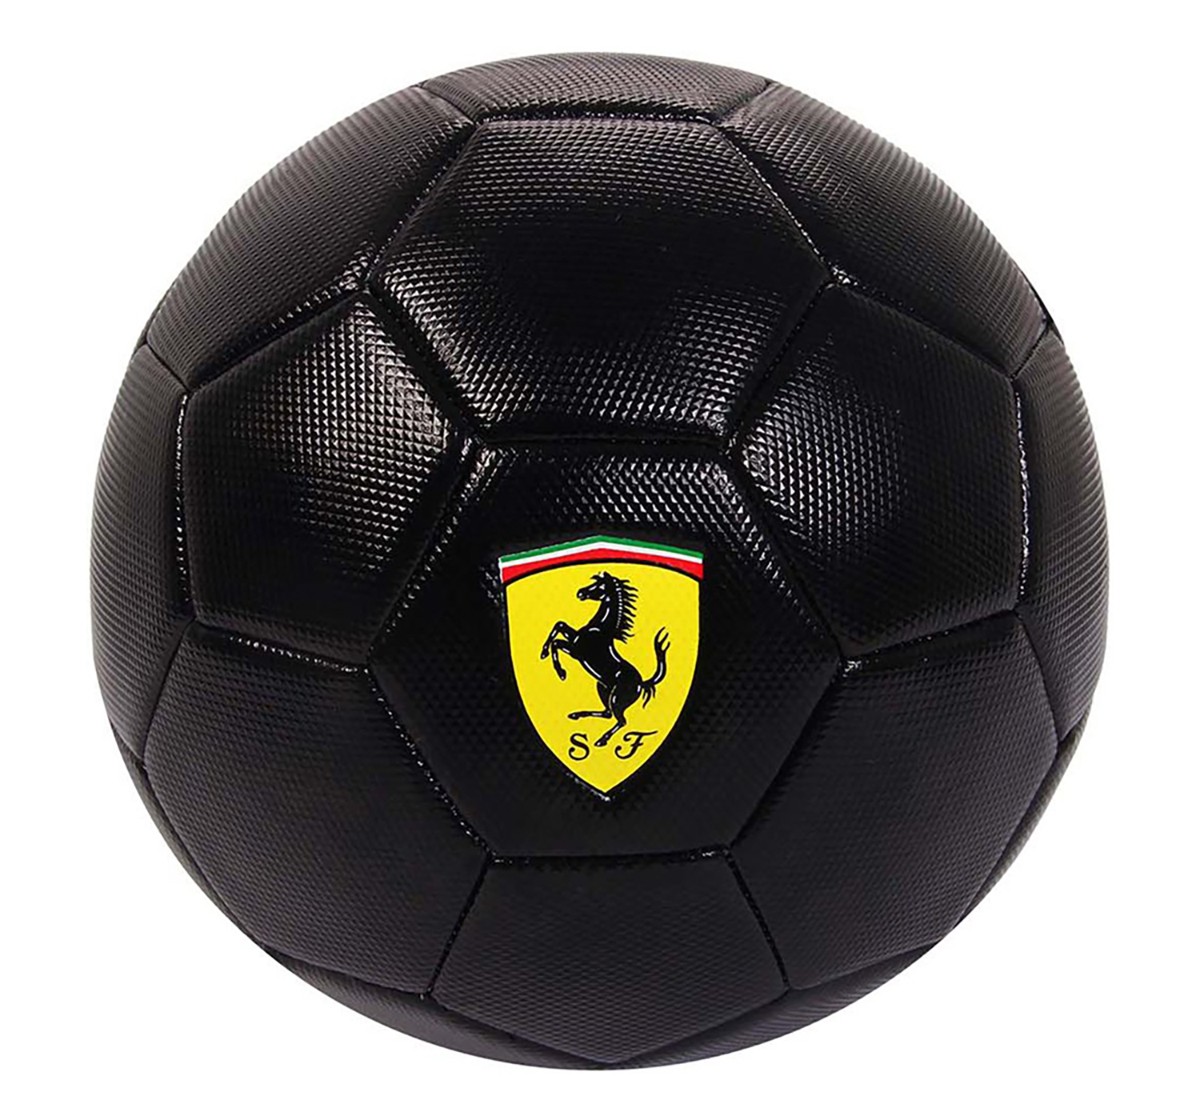 Ferrari Soccer Ball Size 5, Sports & Accessories for Kids age 3Y+ (Black)